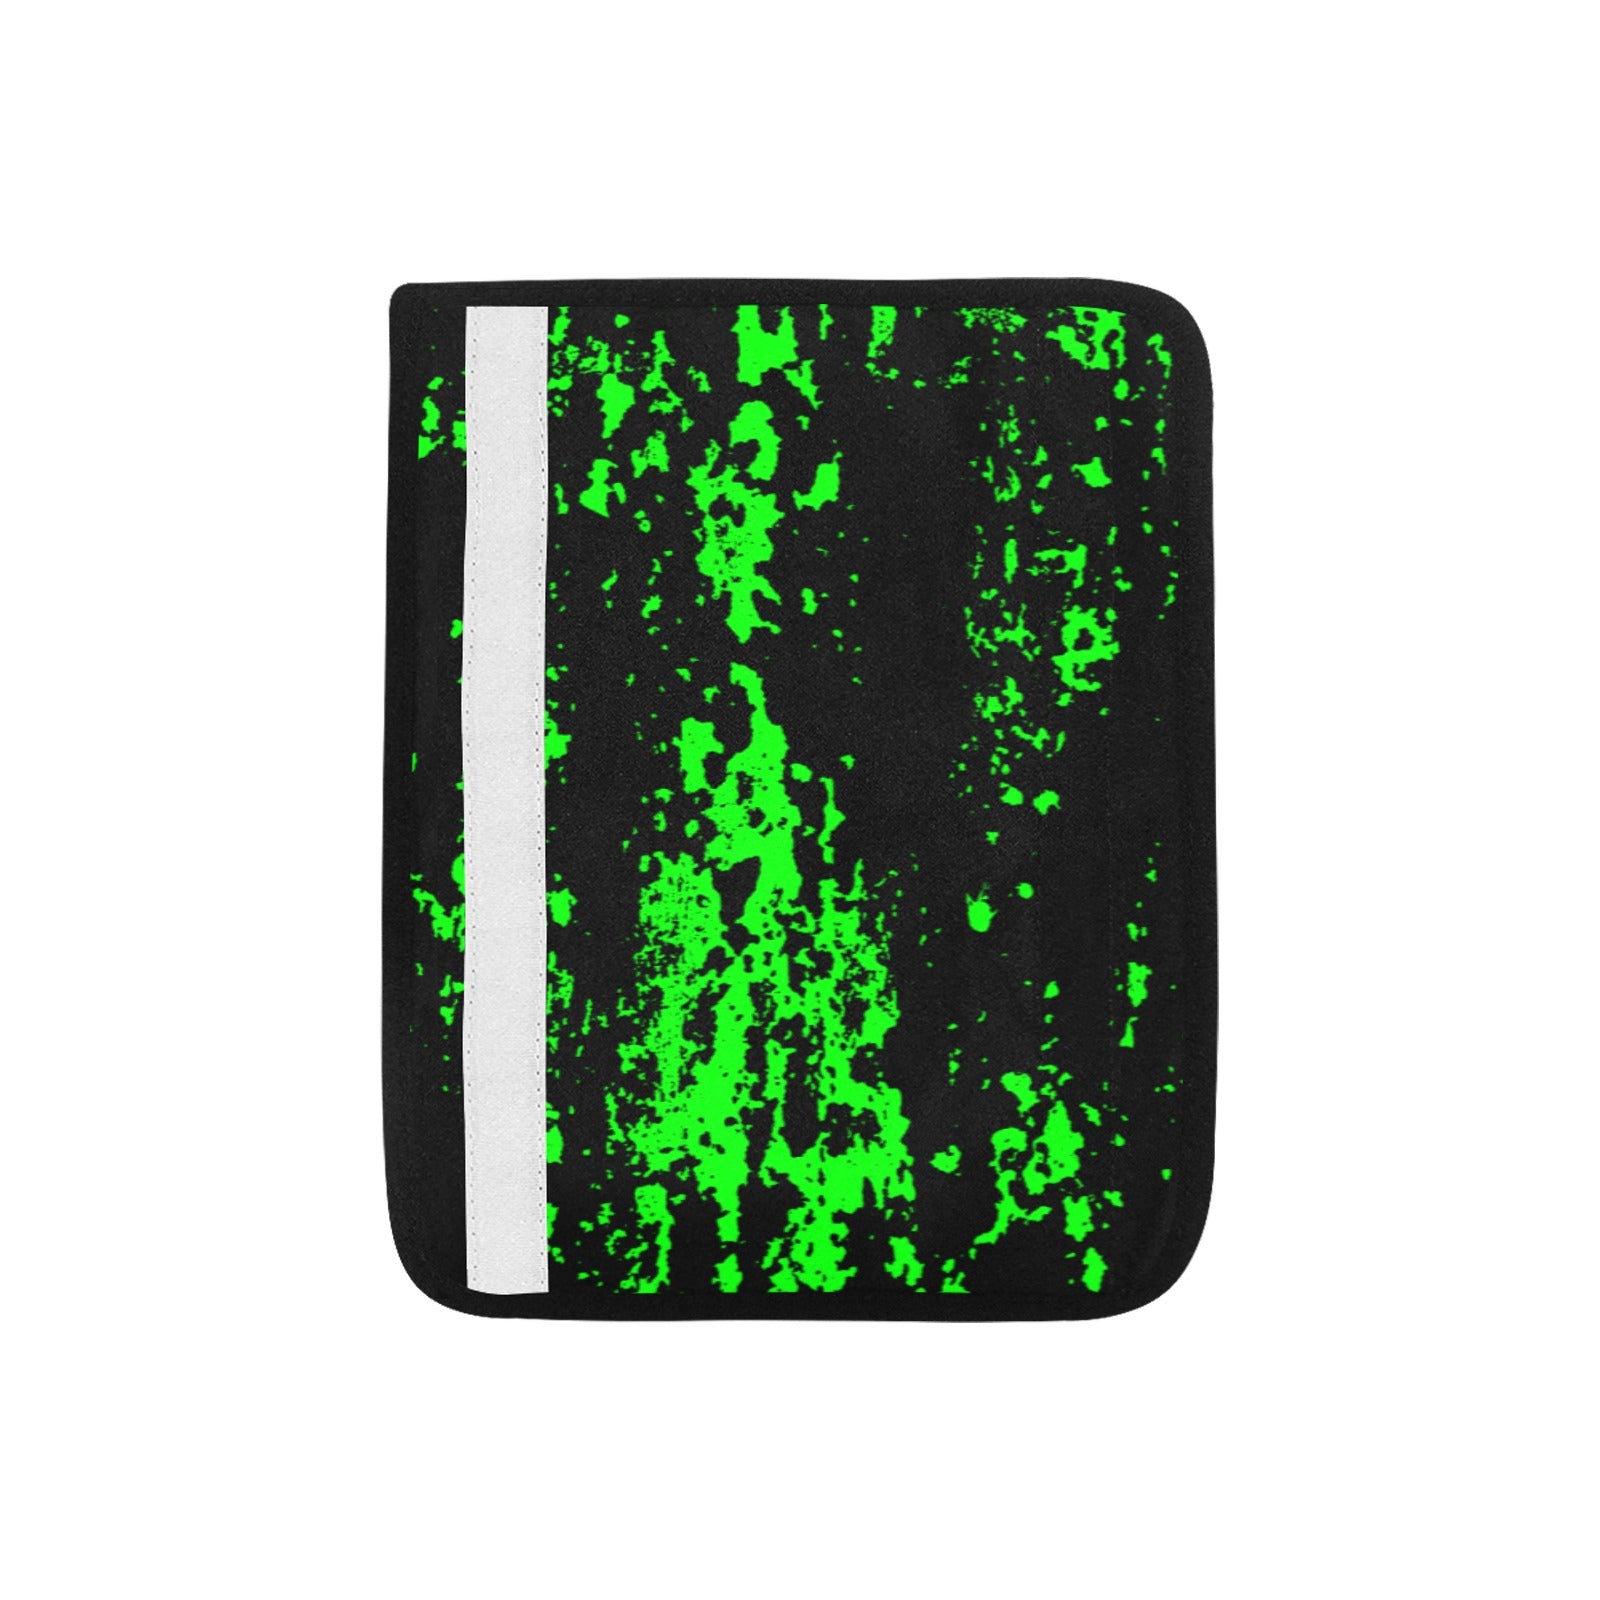 Neon Green Spray on Black Car Seat Belt Cover 7" x 12.6"